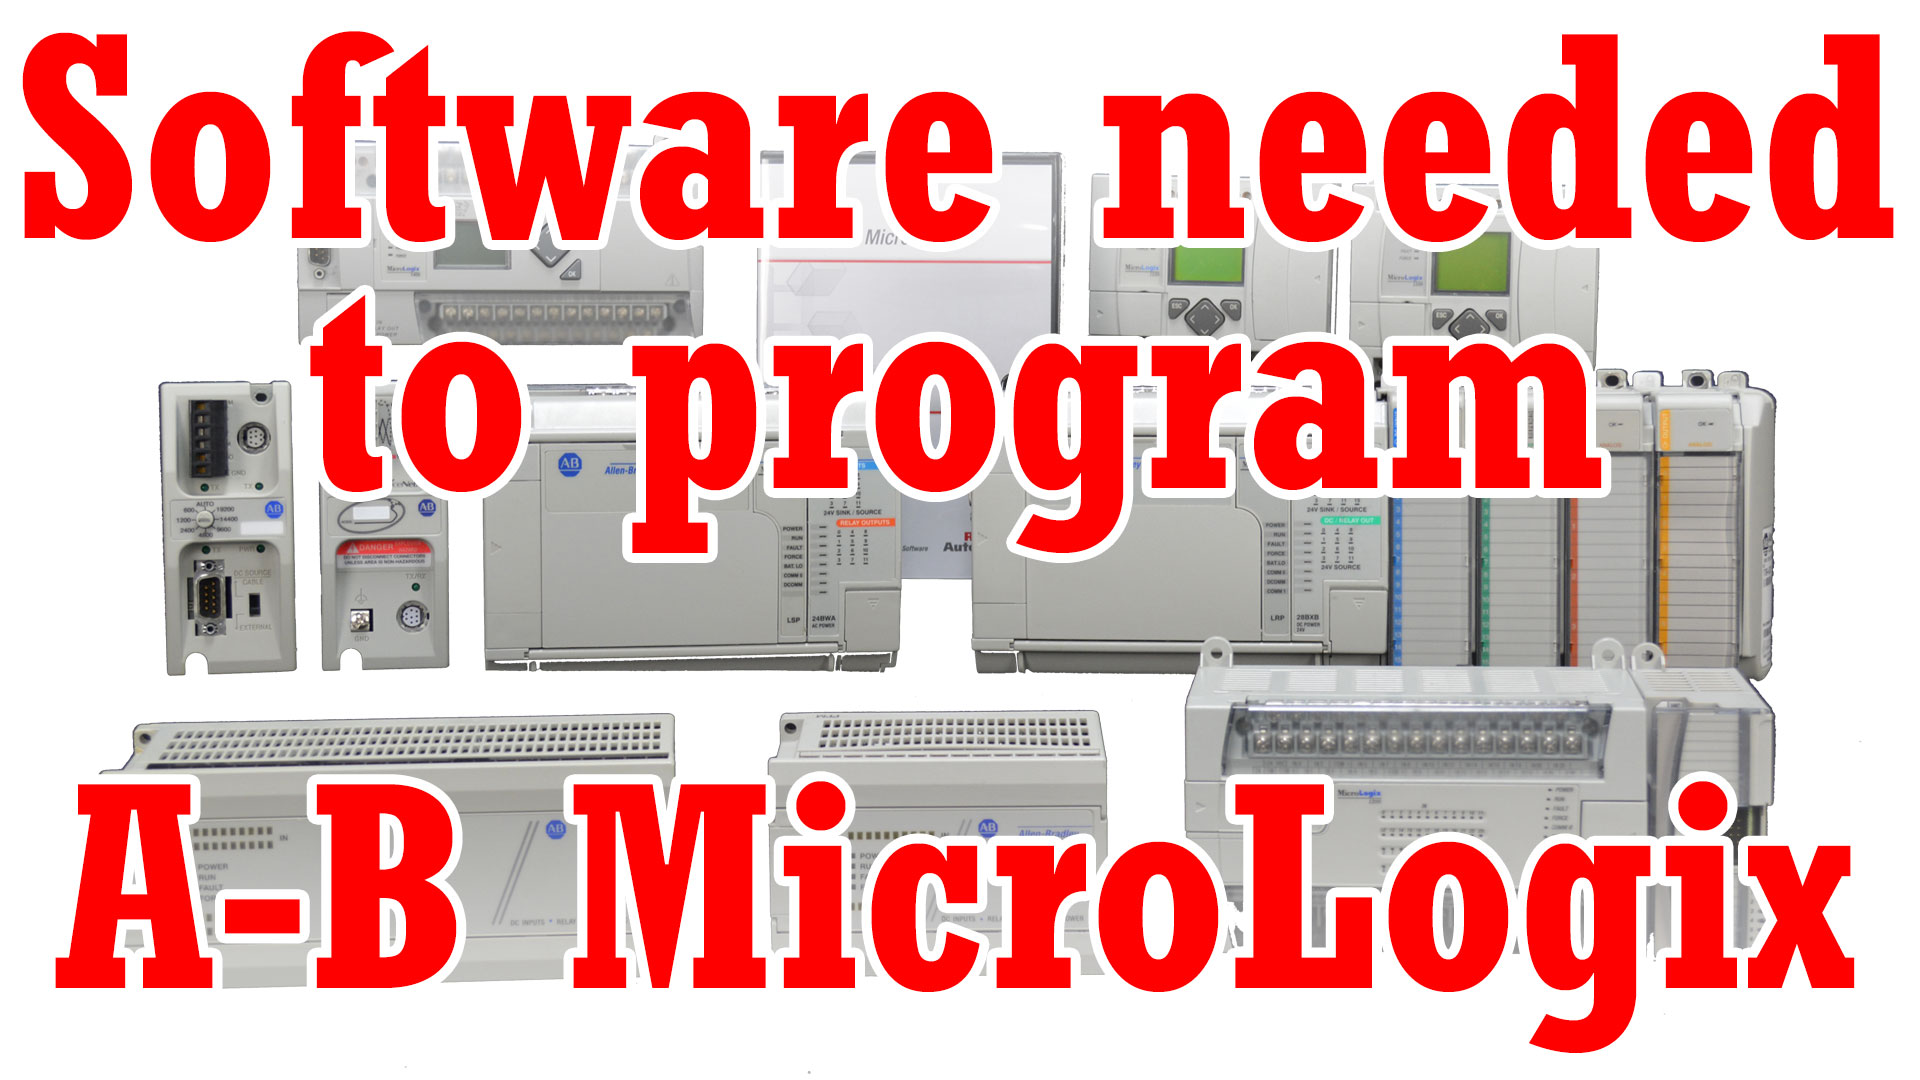 RSLogix Micro - MicroLogix Programming Software (M3E09)